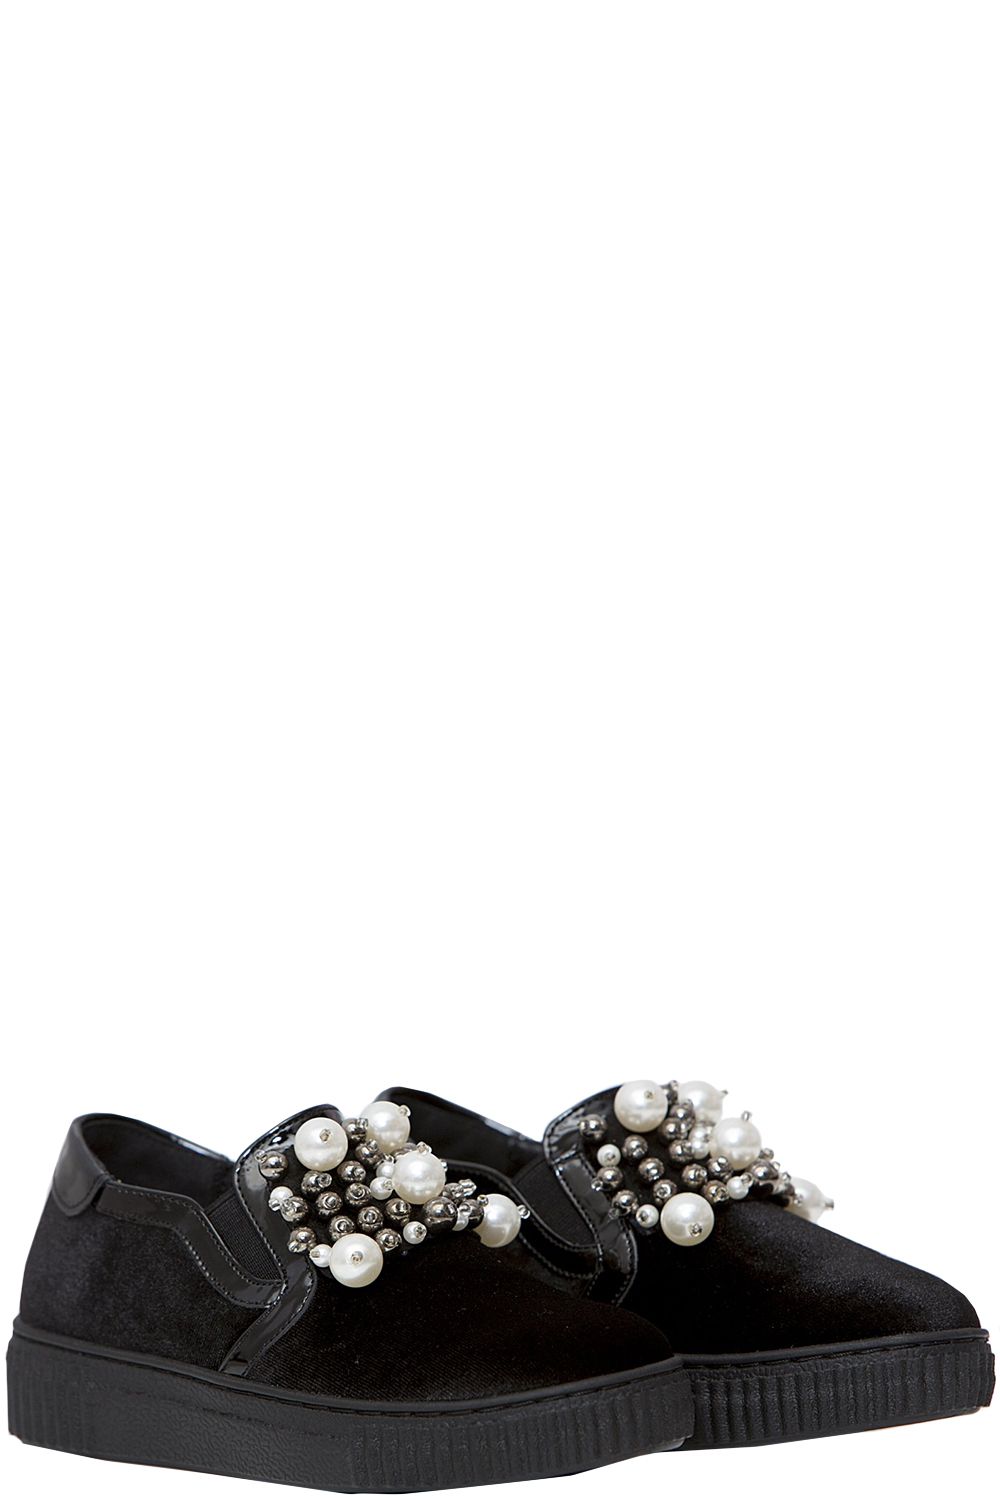 Ботинки Holala, размер 29, цвет черный HS0020T - фото 4